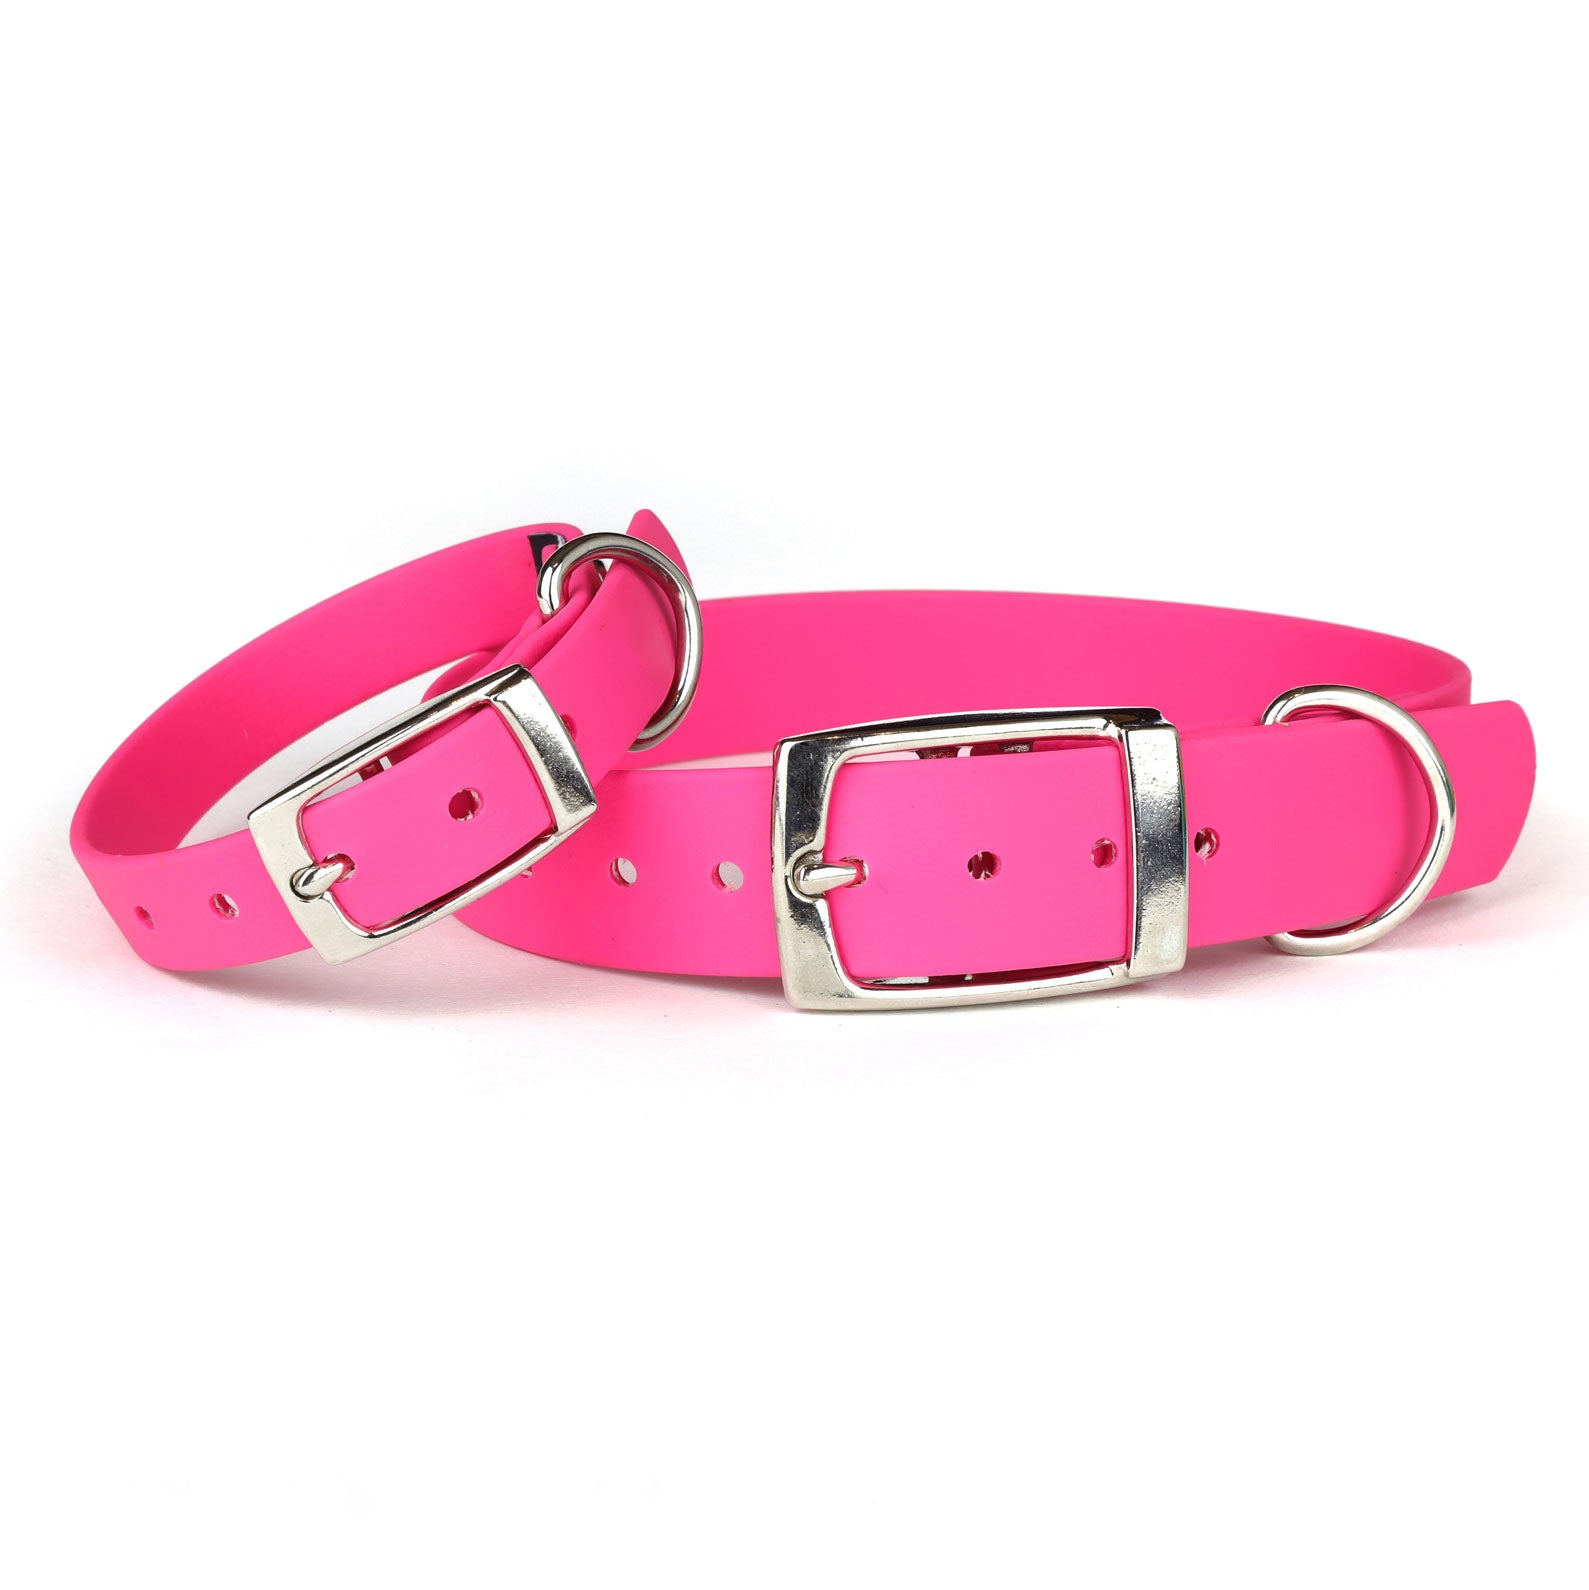 Waterproof Dog Collar in Pink